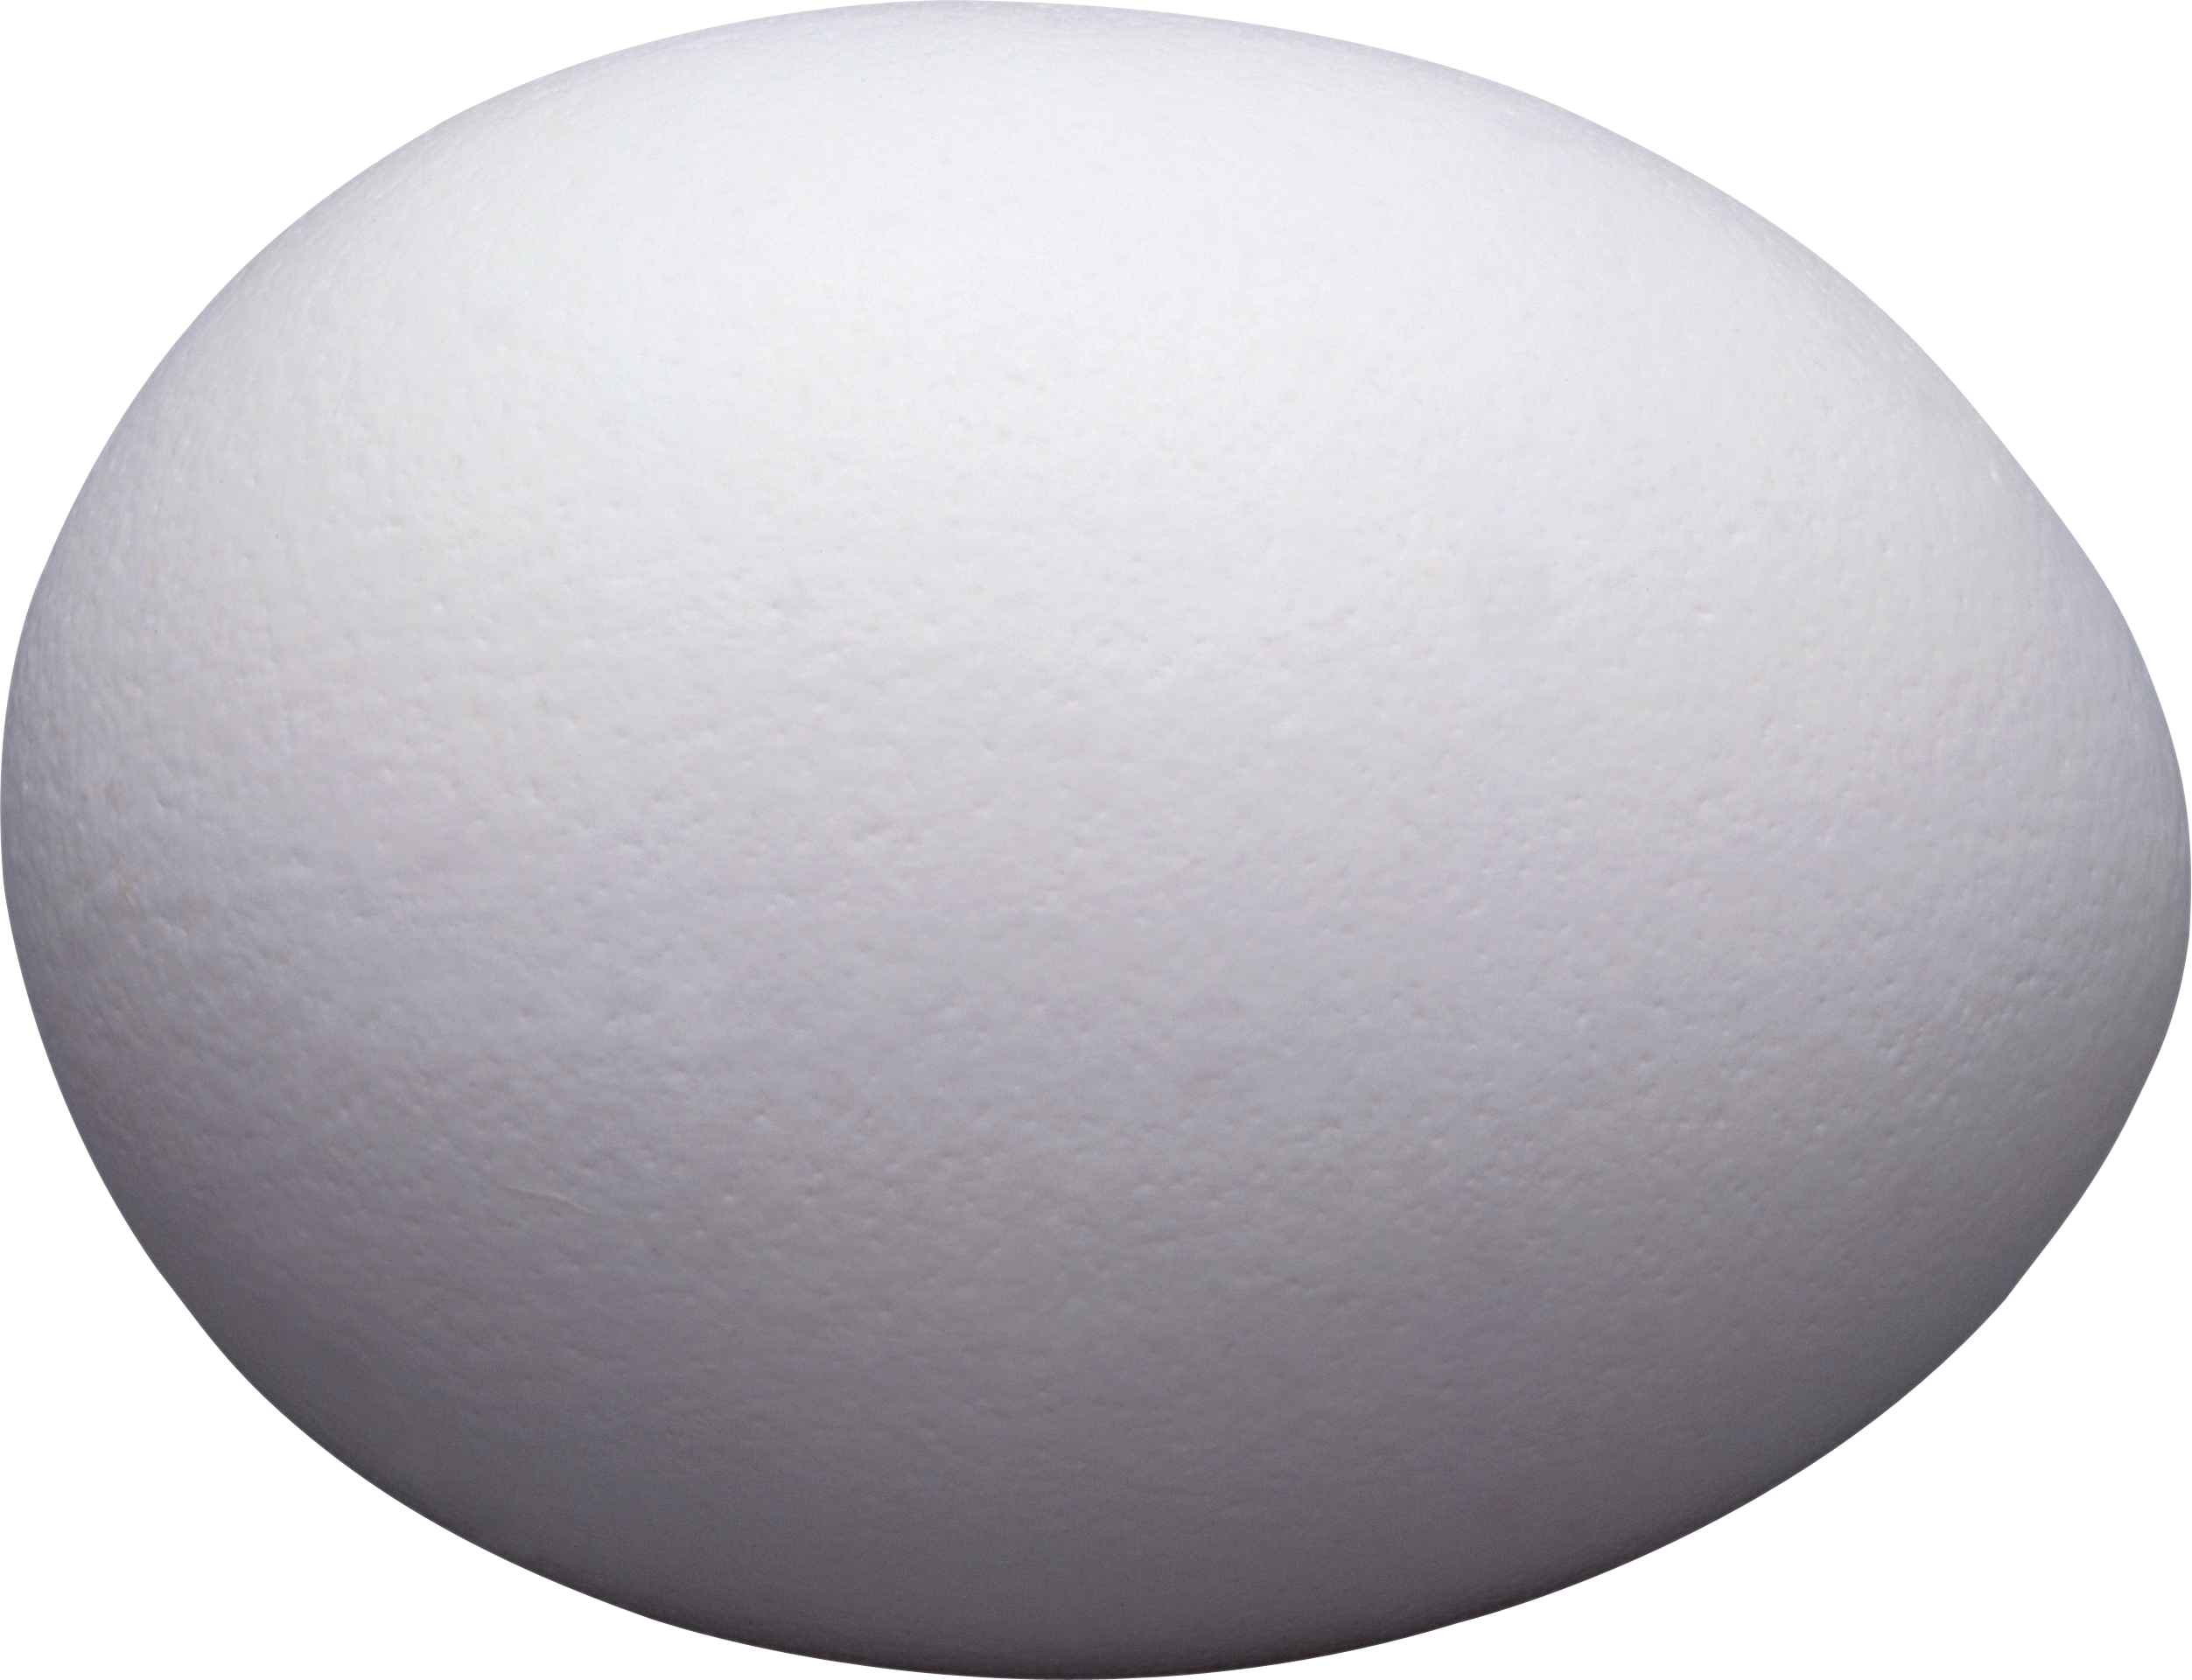 Beyaz yumurta